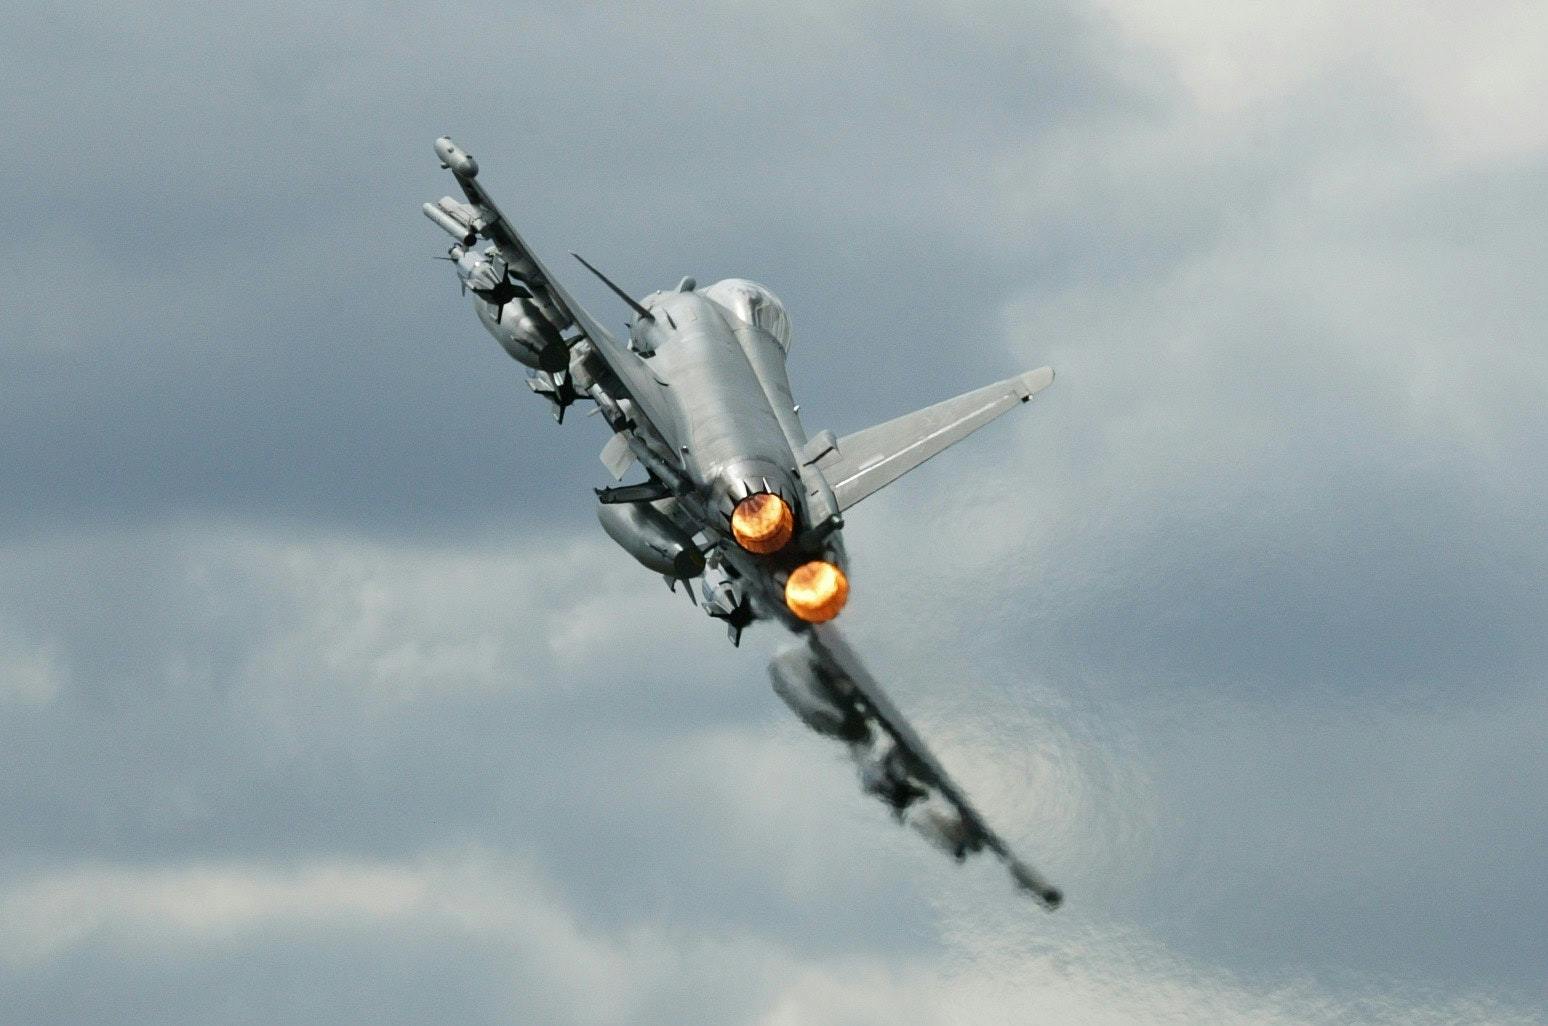 A Typhoon scrambles to intercept an aircraft. (Credit: Vladimir Korolkov)